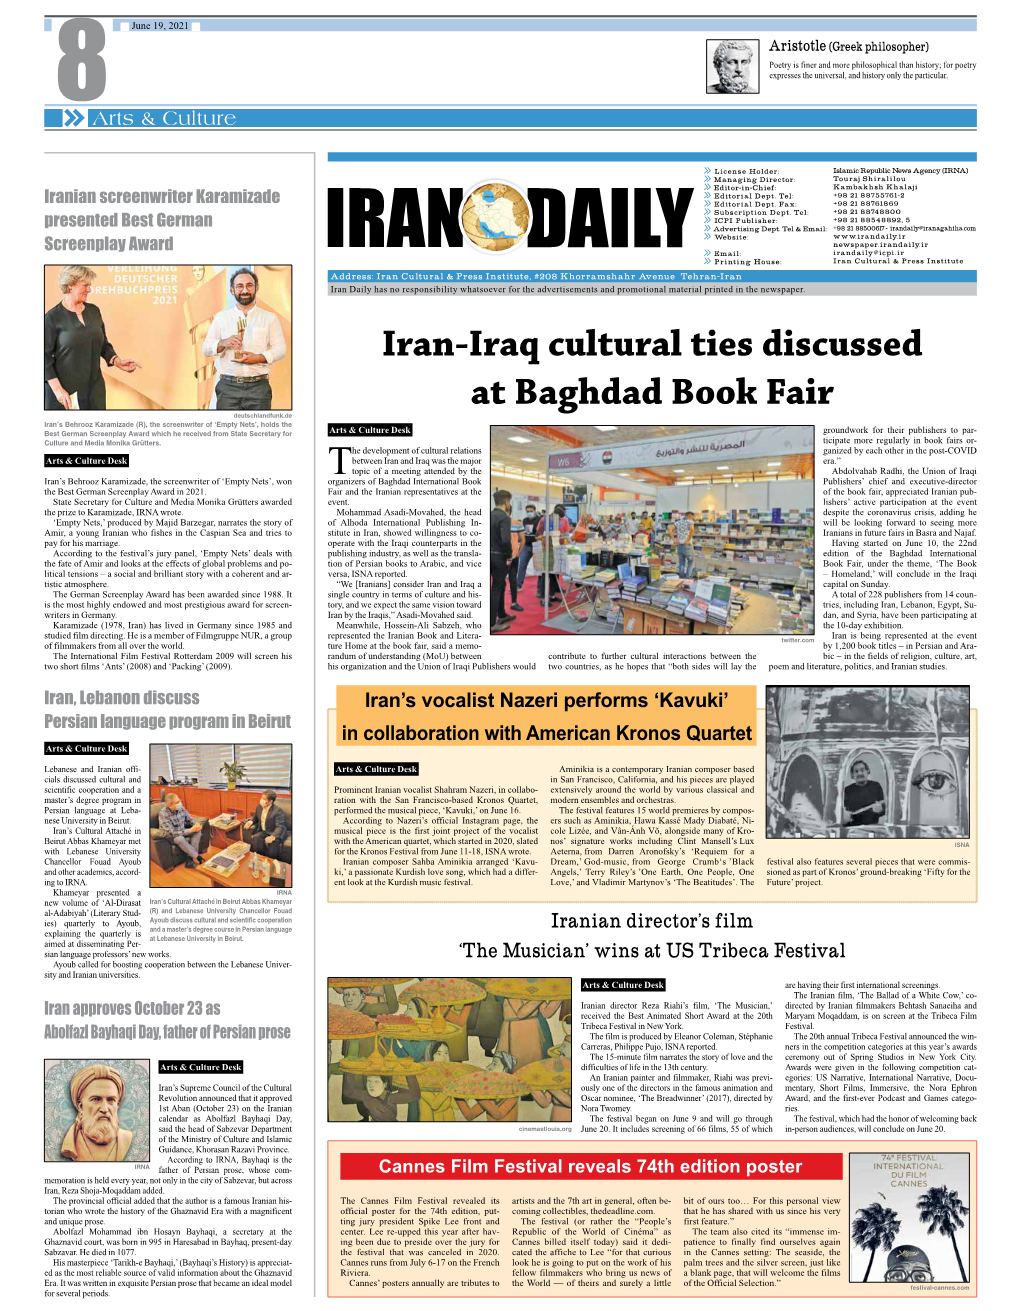 Iran-Iraq Cultural Ties Discussed at Baghdad Book Fair